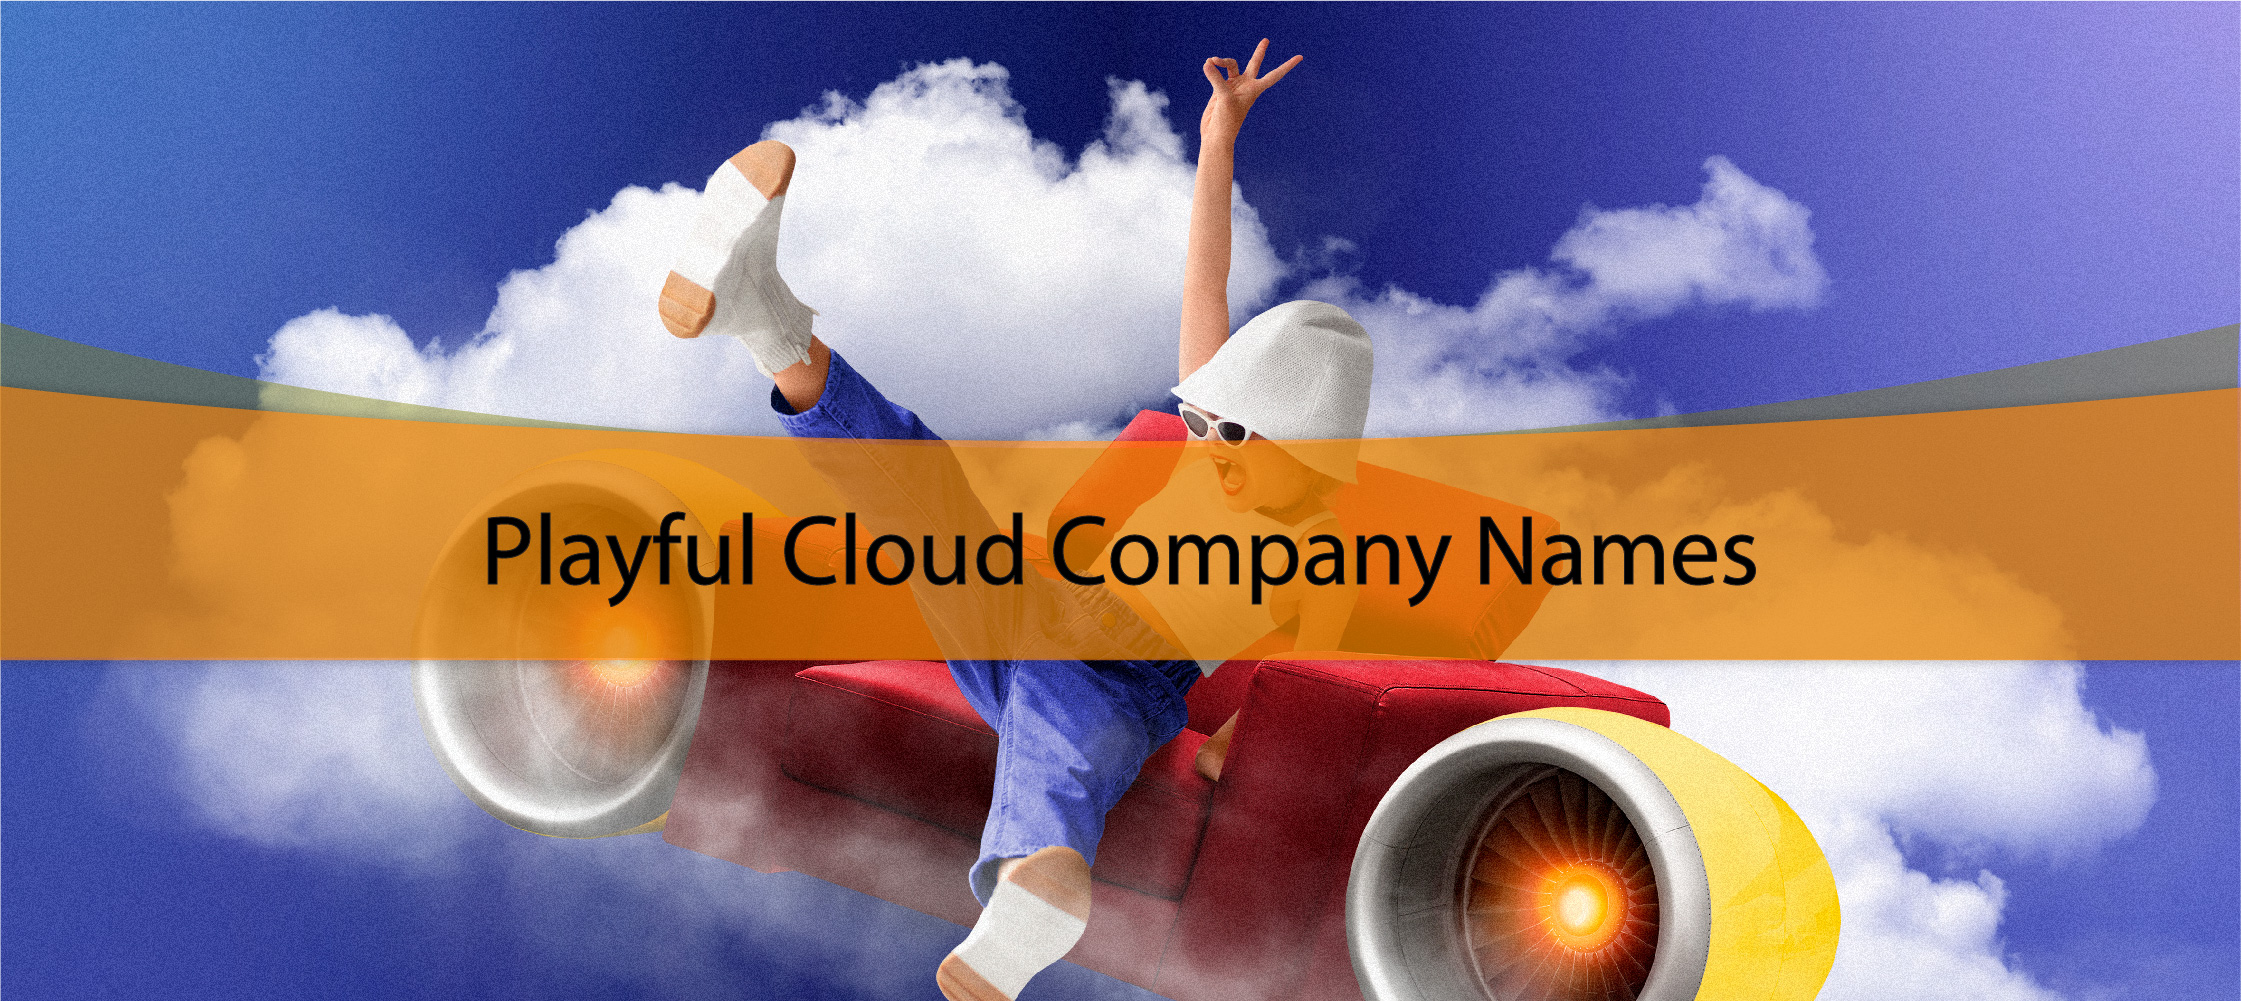 Playful Cloud Company Names